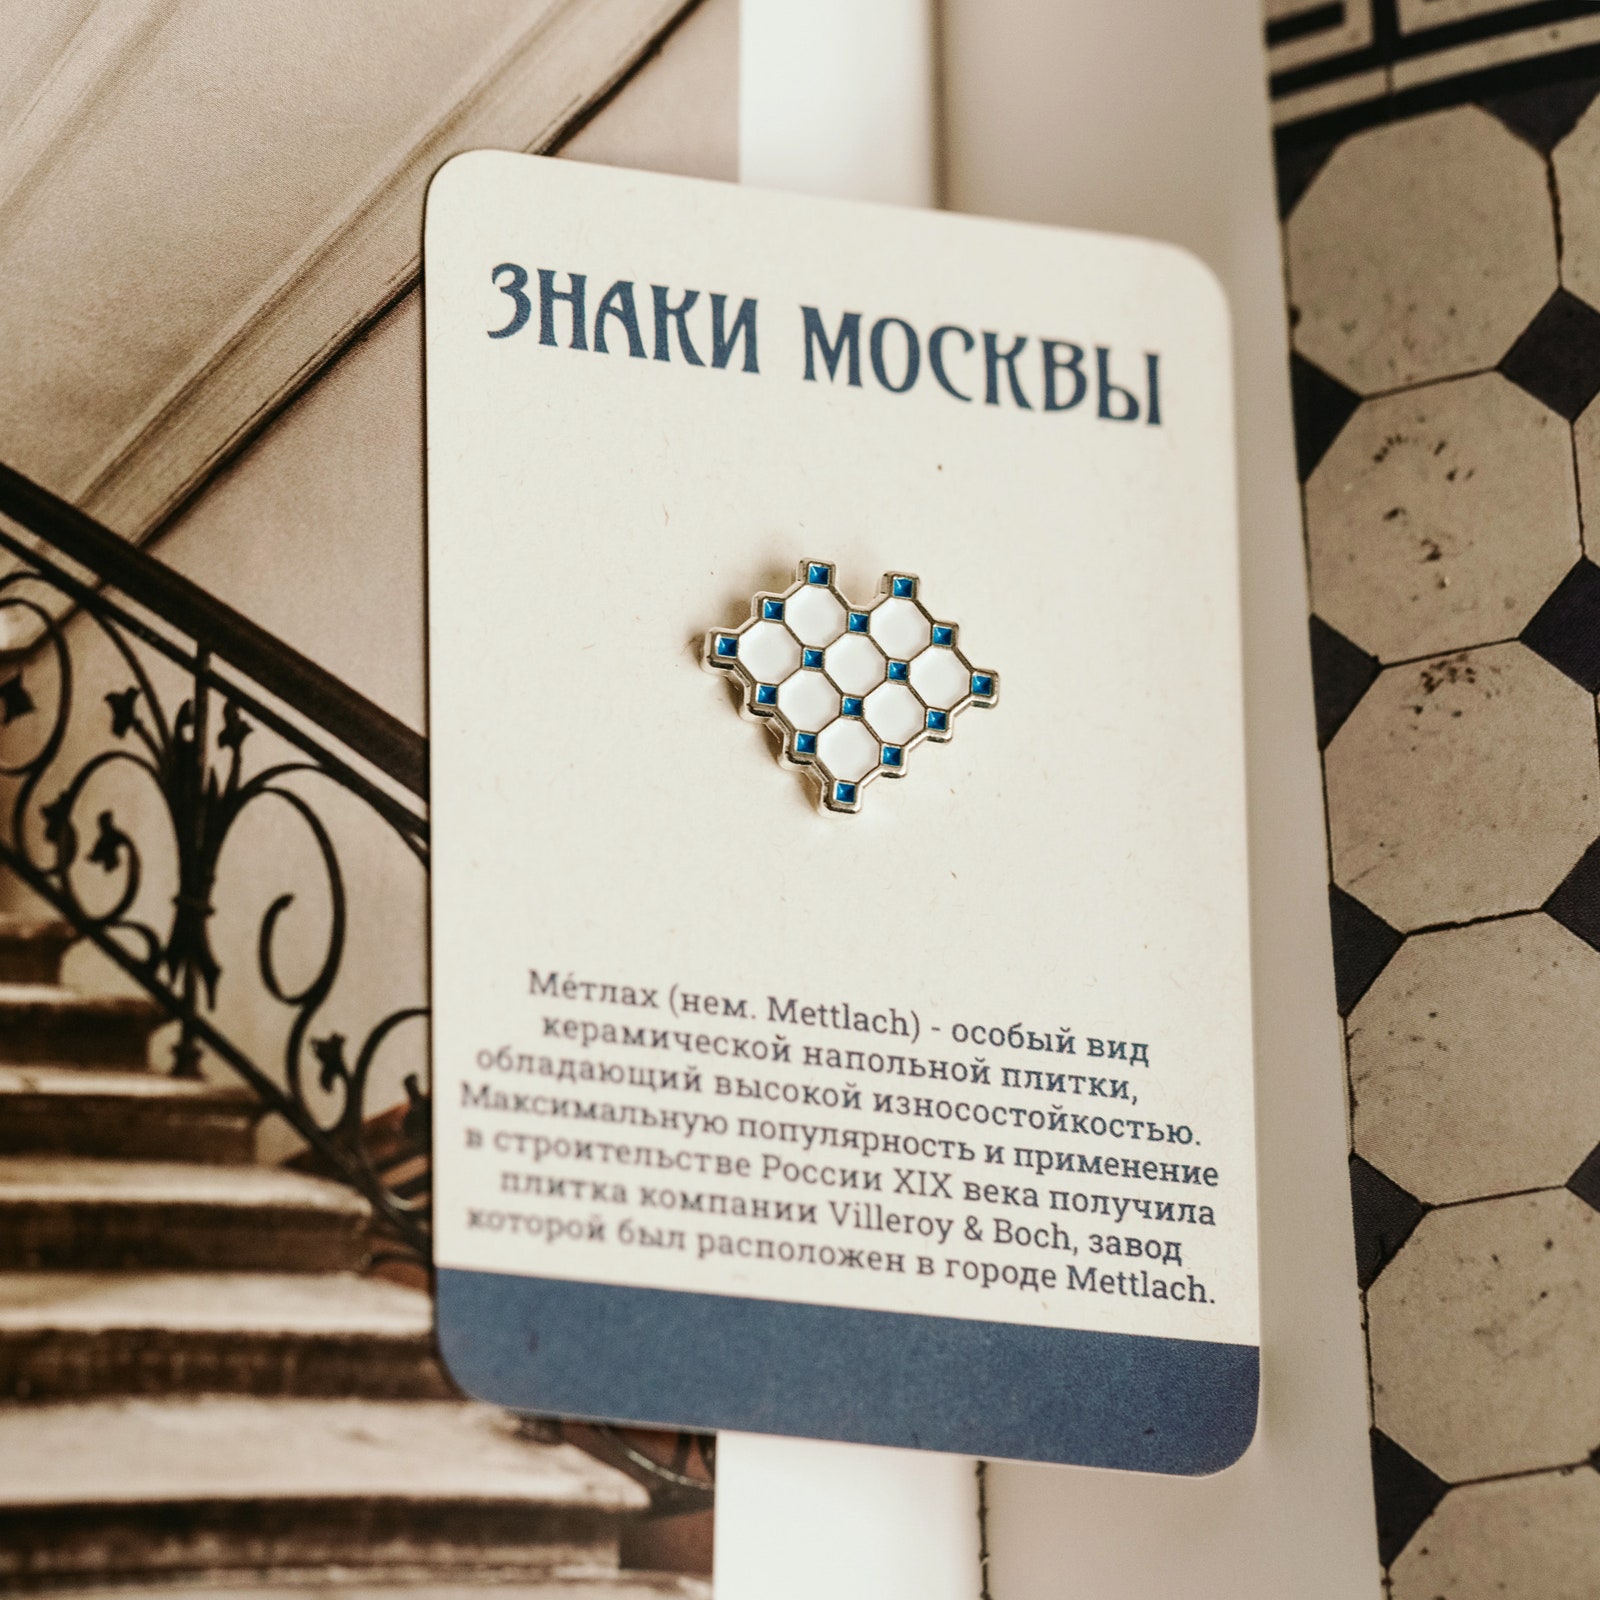 Moscow Signs значки с элементами архитектурного наследия Москвы